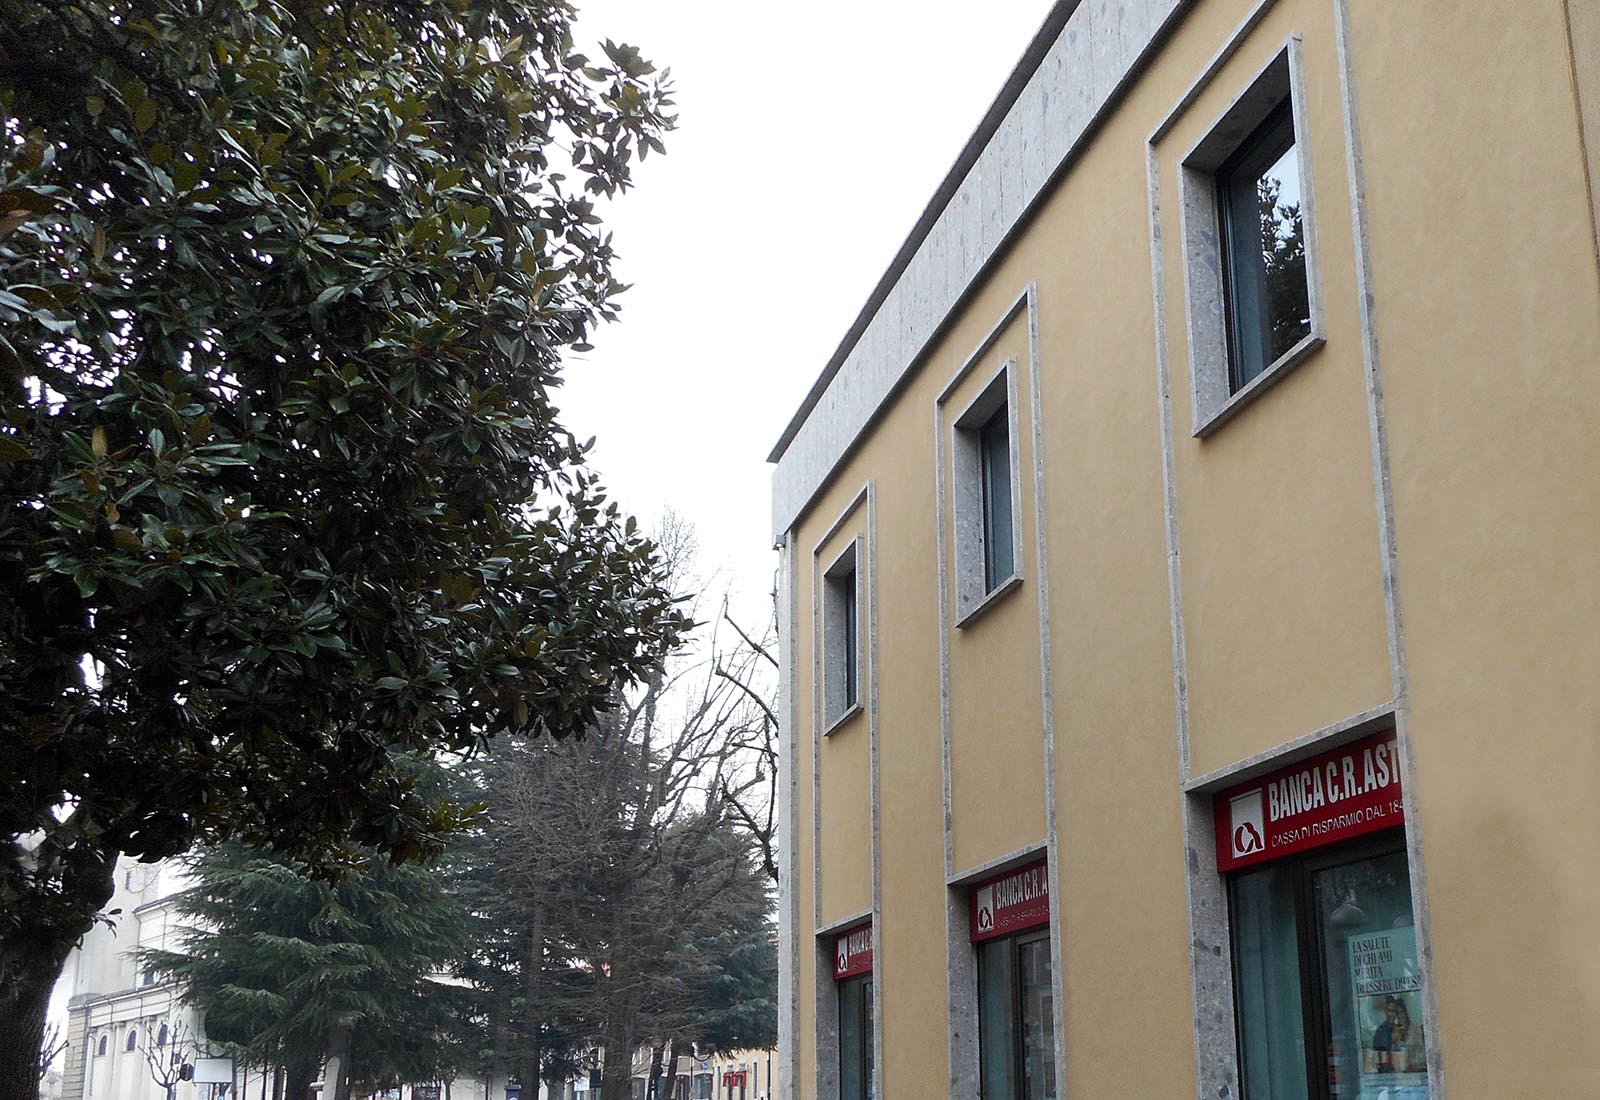 C.R.Asti Bank in Rho - The side facade